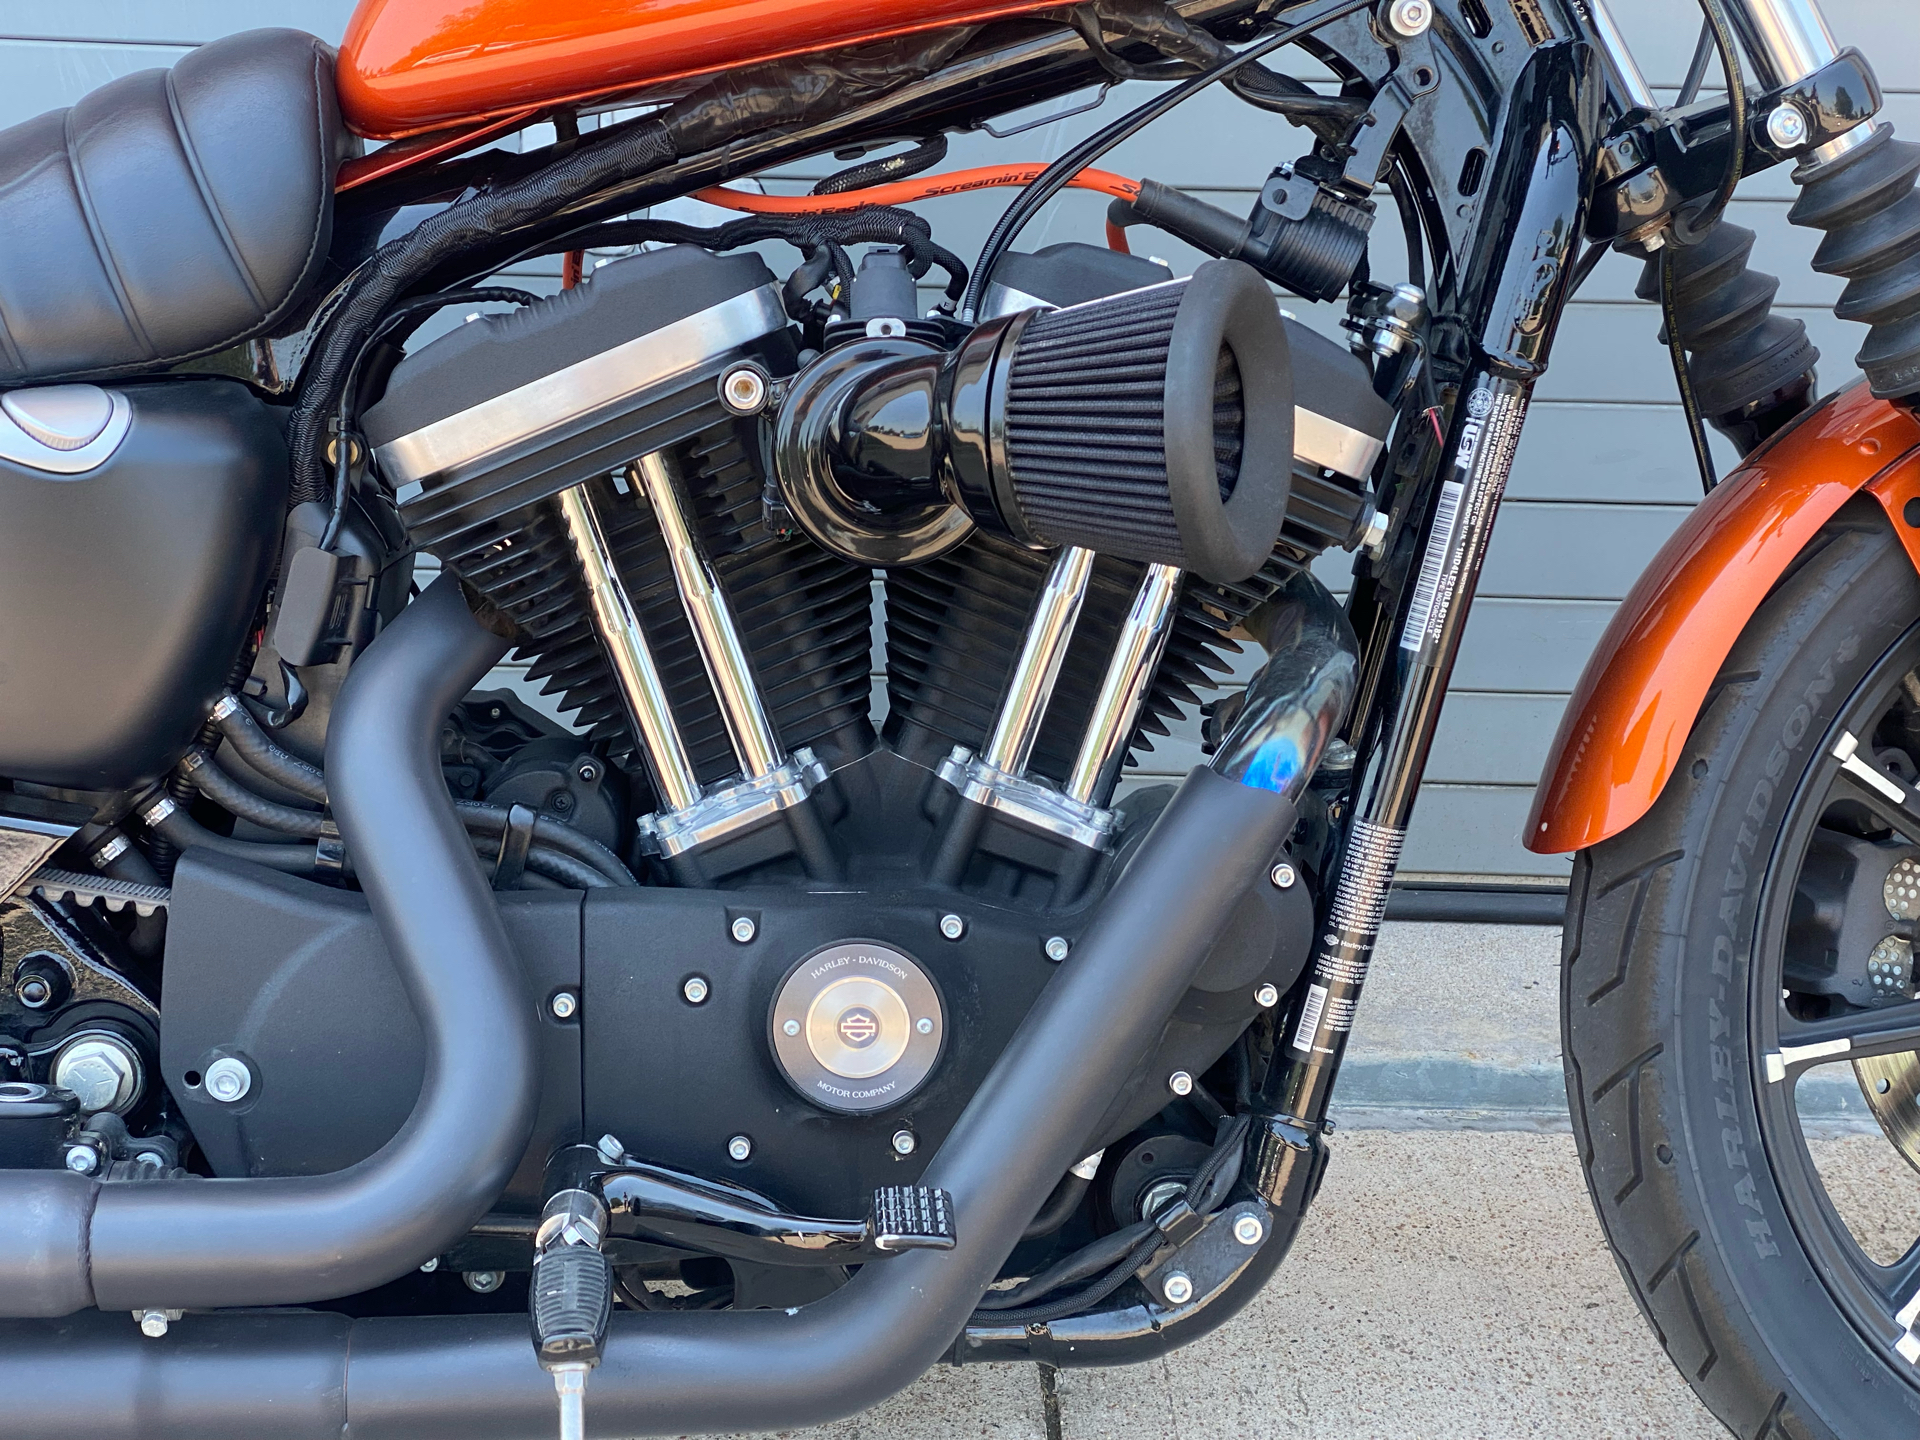 2020 Harley-Davidson Iron 883™ in Grand Prairie, Texas - Photo 7